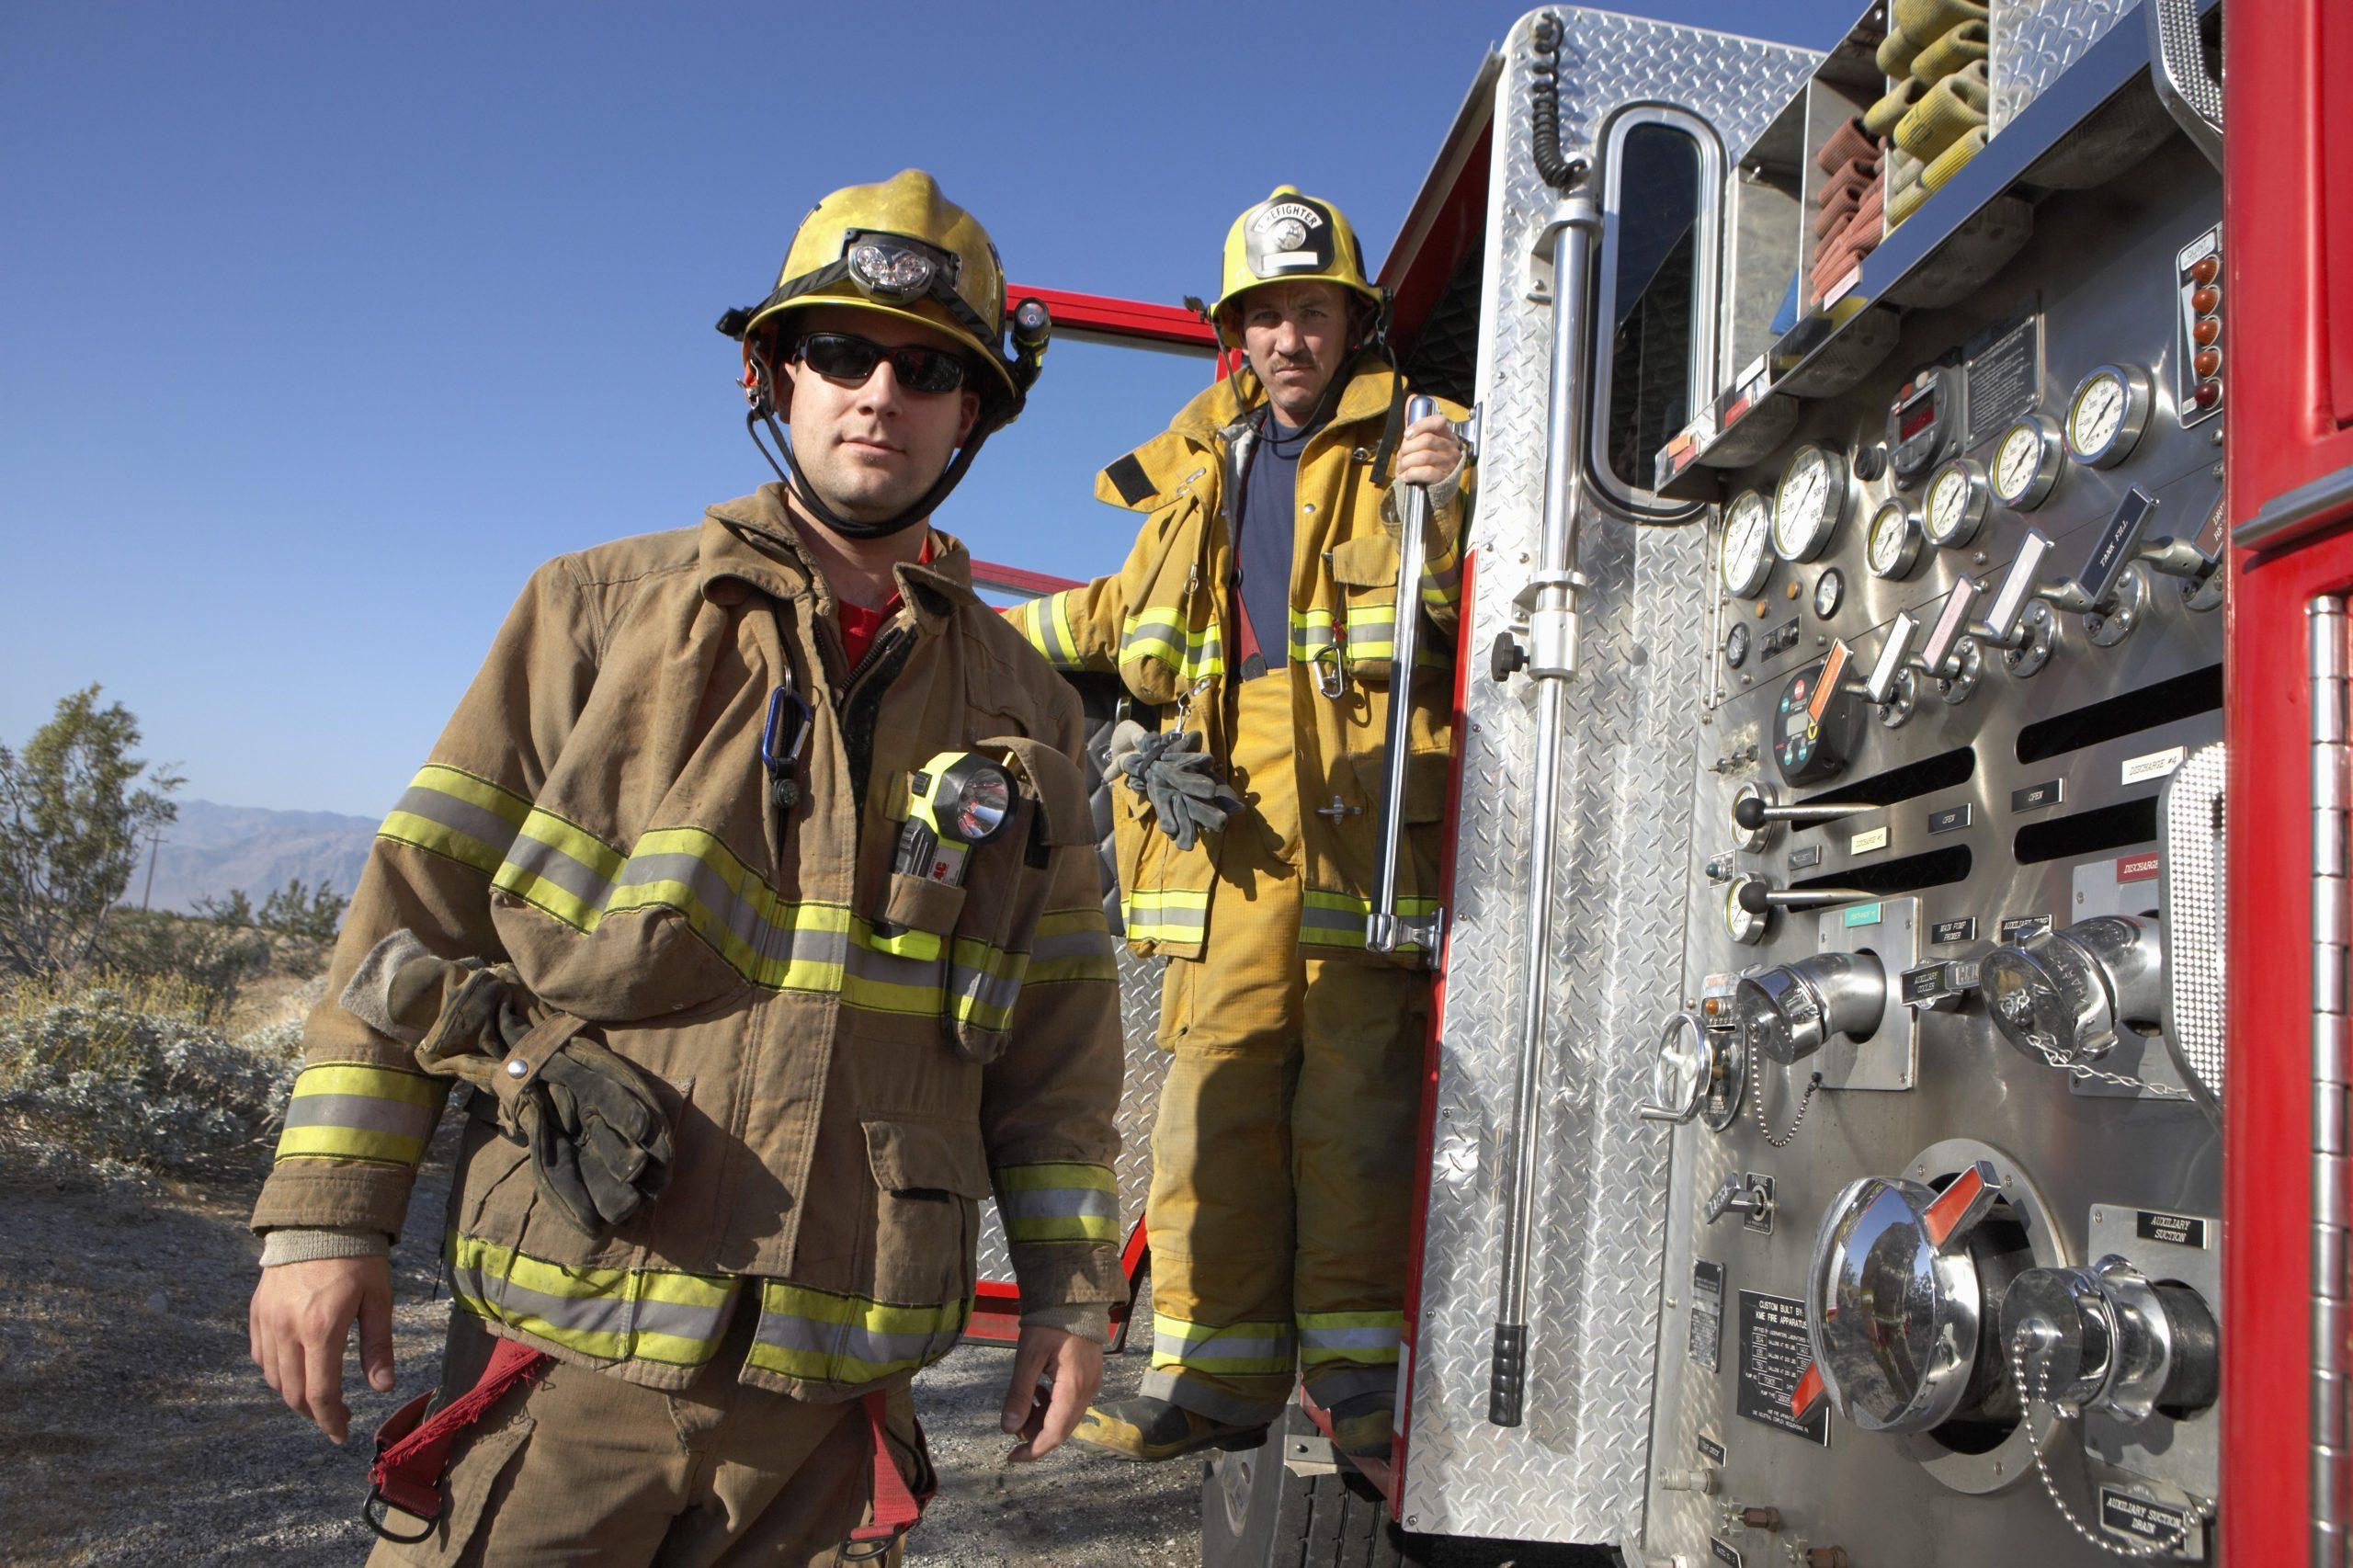 10 Top Online Associate's in Fire Science